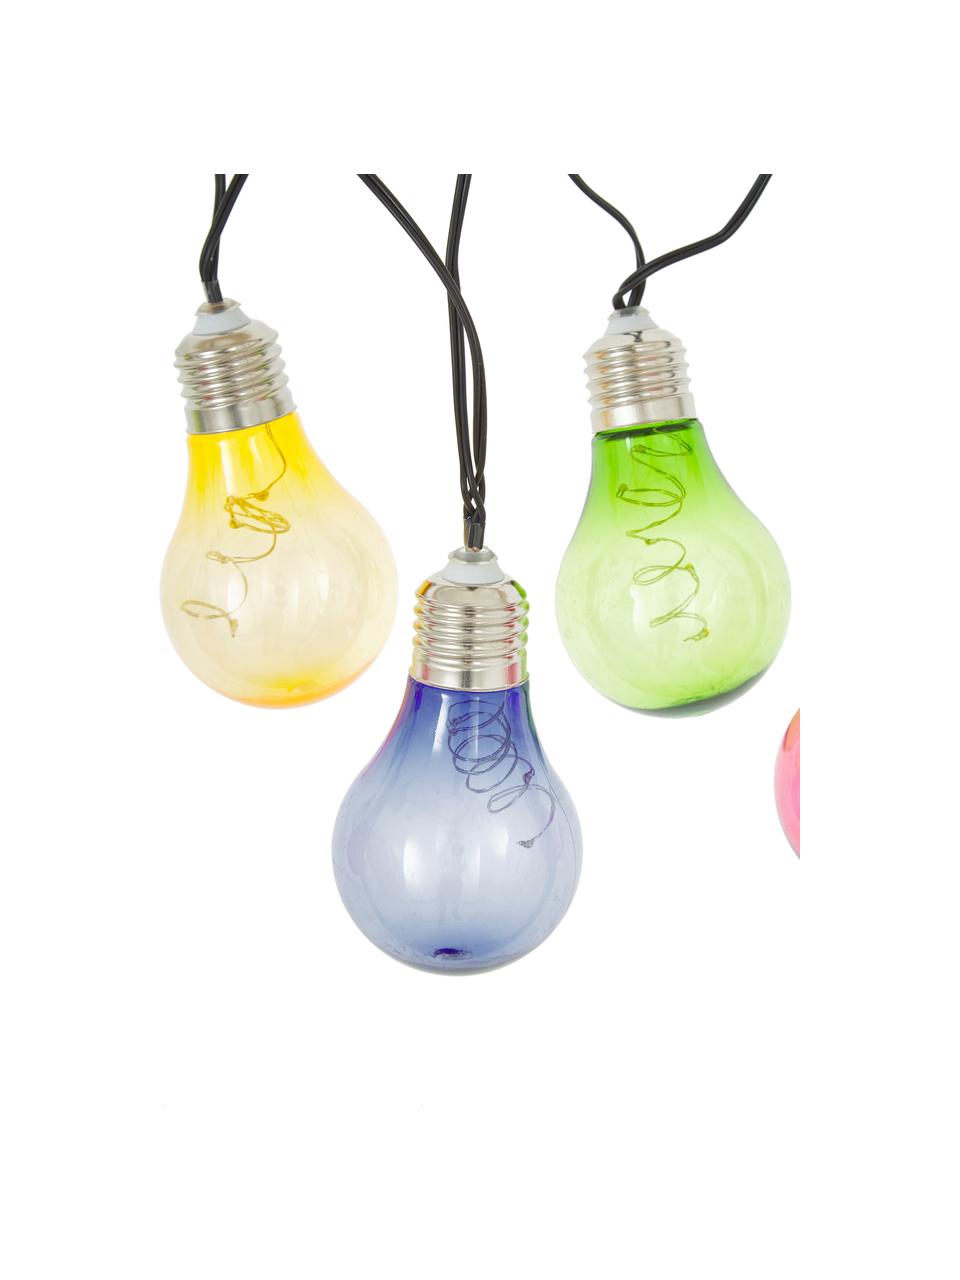 Guirlande lumineuse LED Glow, 150 cm, Multicolore, long. 150 cm